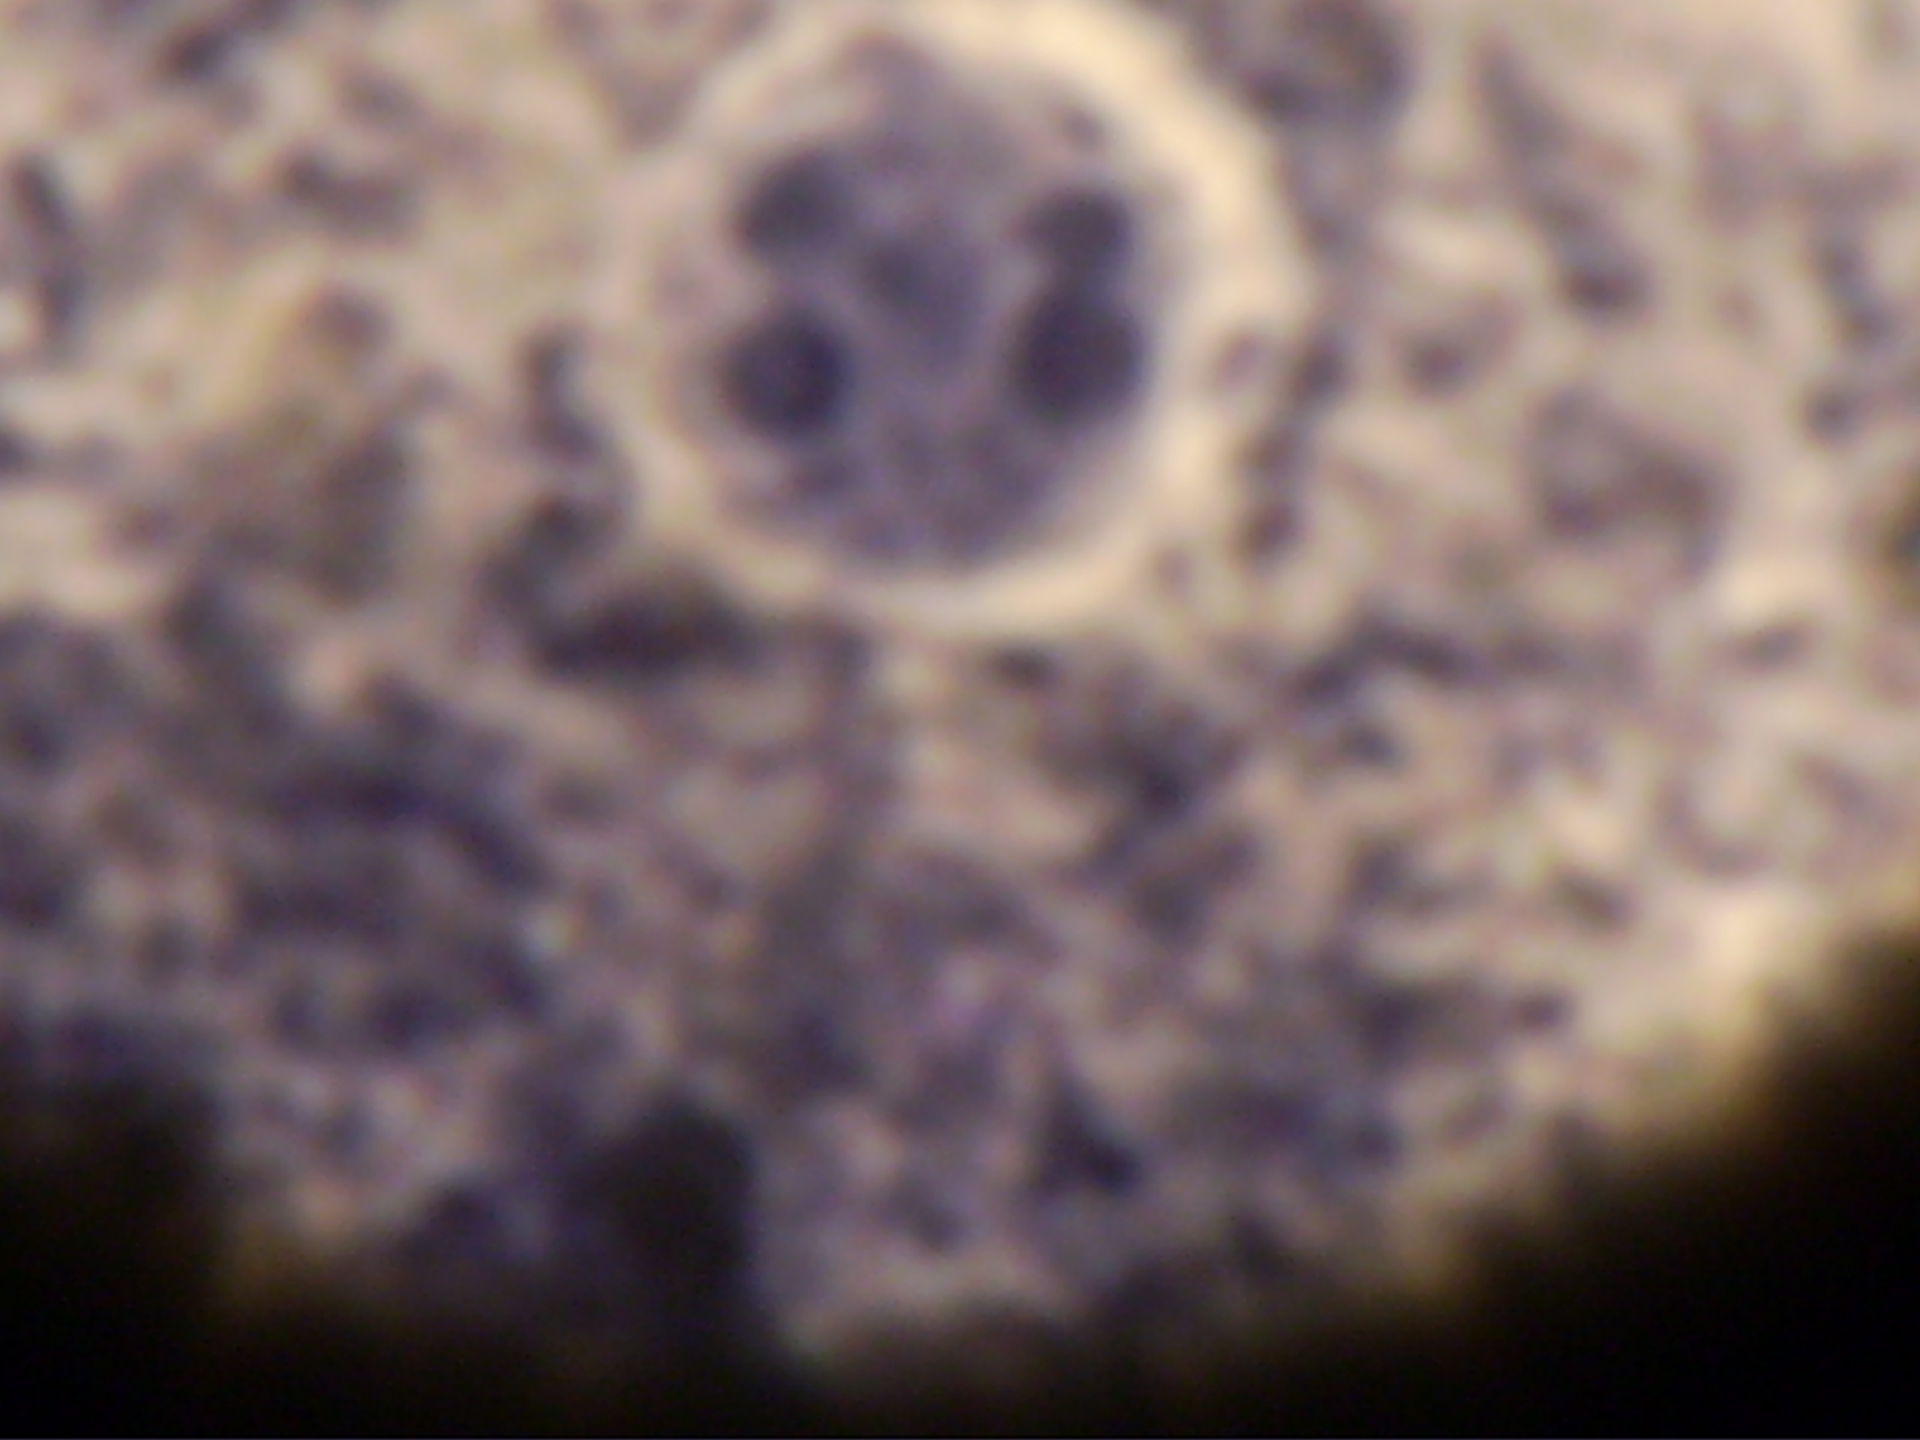 Mikroskopische Aufnahme der humanpathogenen Amöbenart Entamoeba histologica